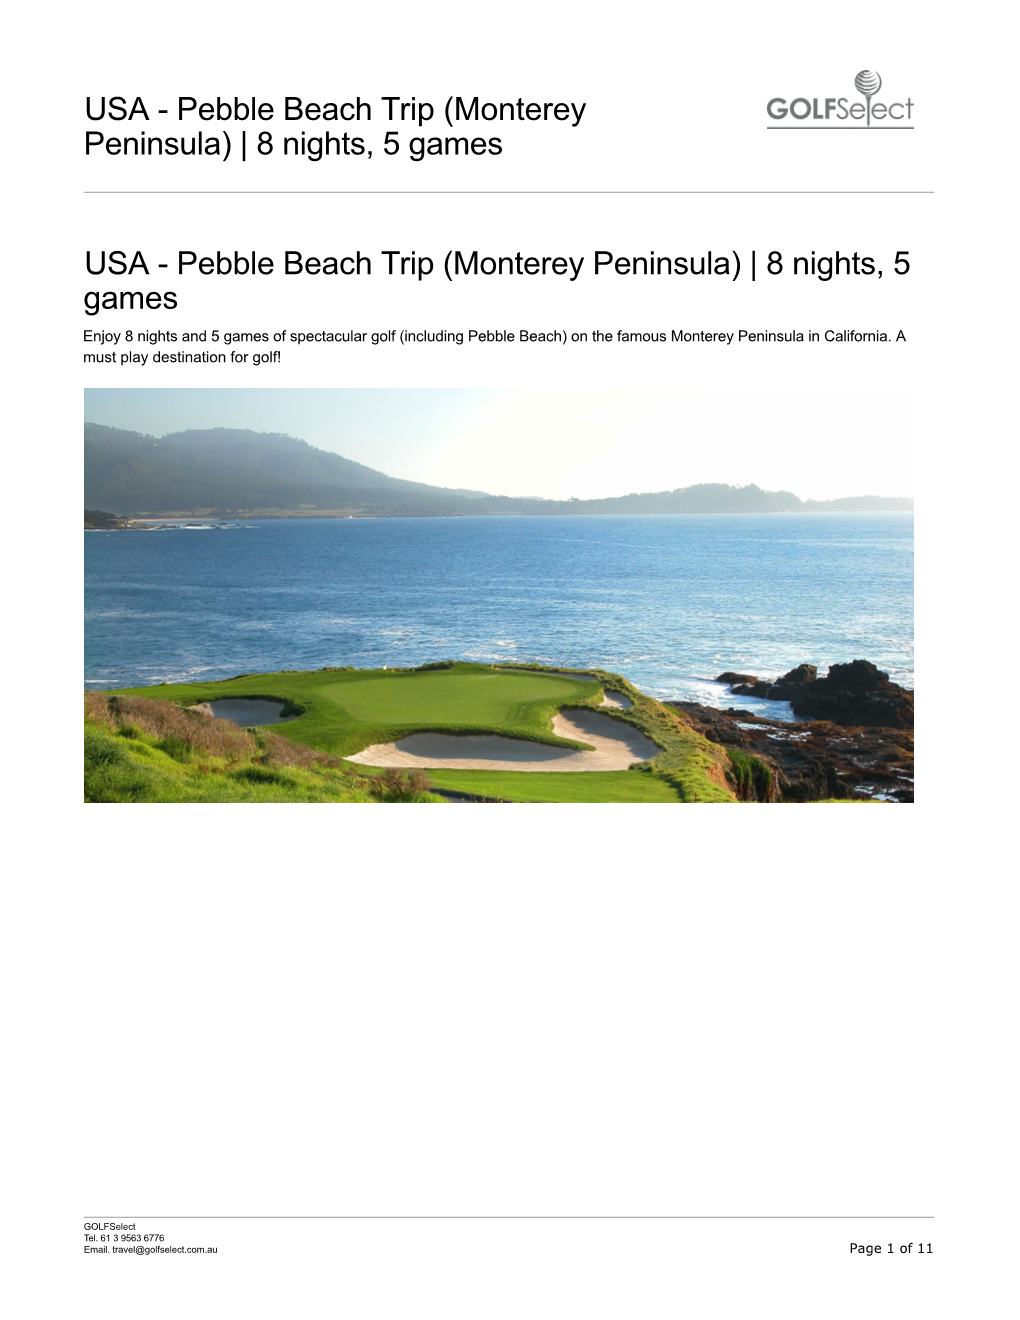 Pebble Beach Trip (Monterey Peninsula) | 8 Nights, 5 Games